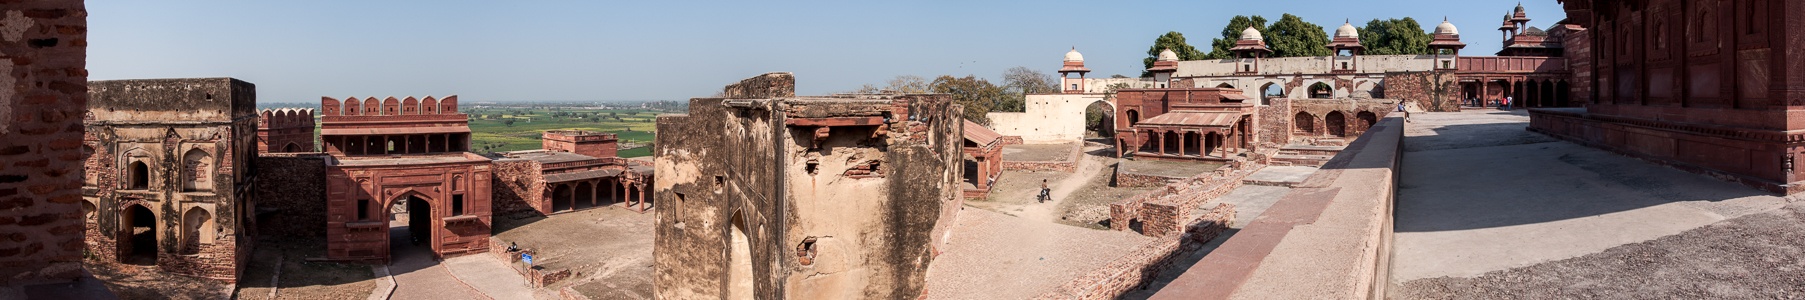 Königspalast Fatehpur Sikri